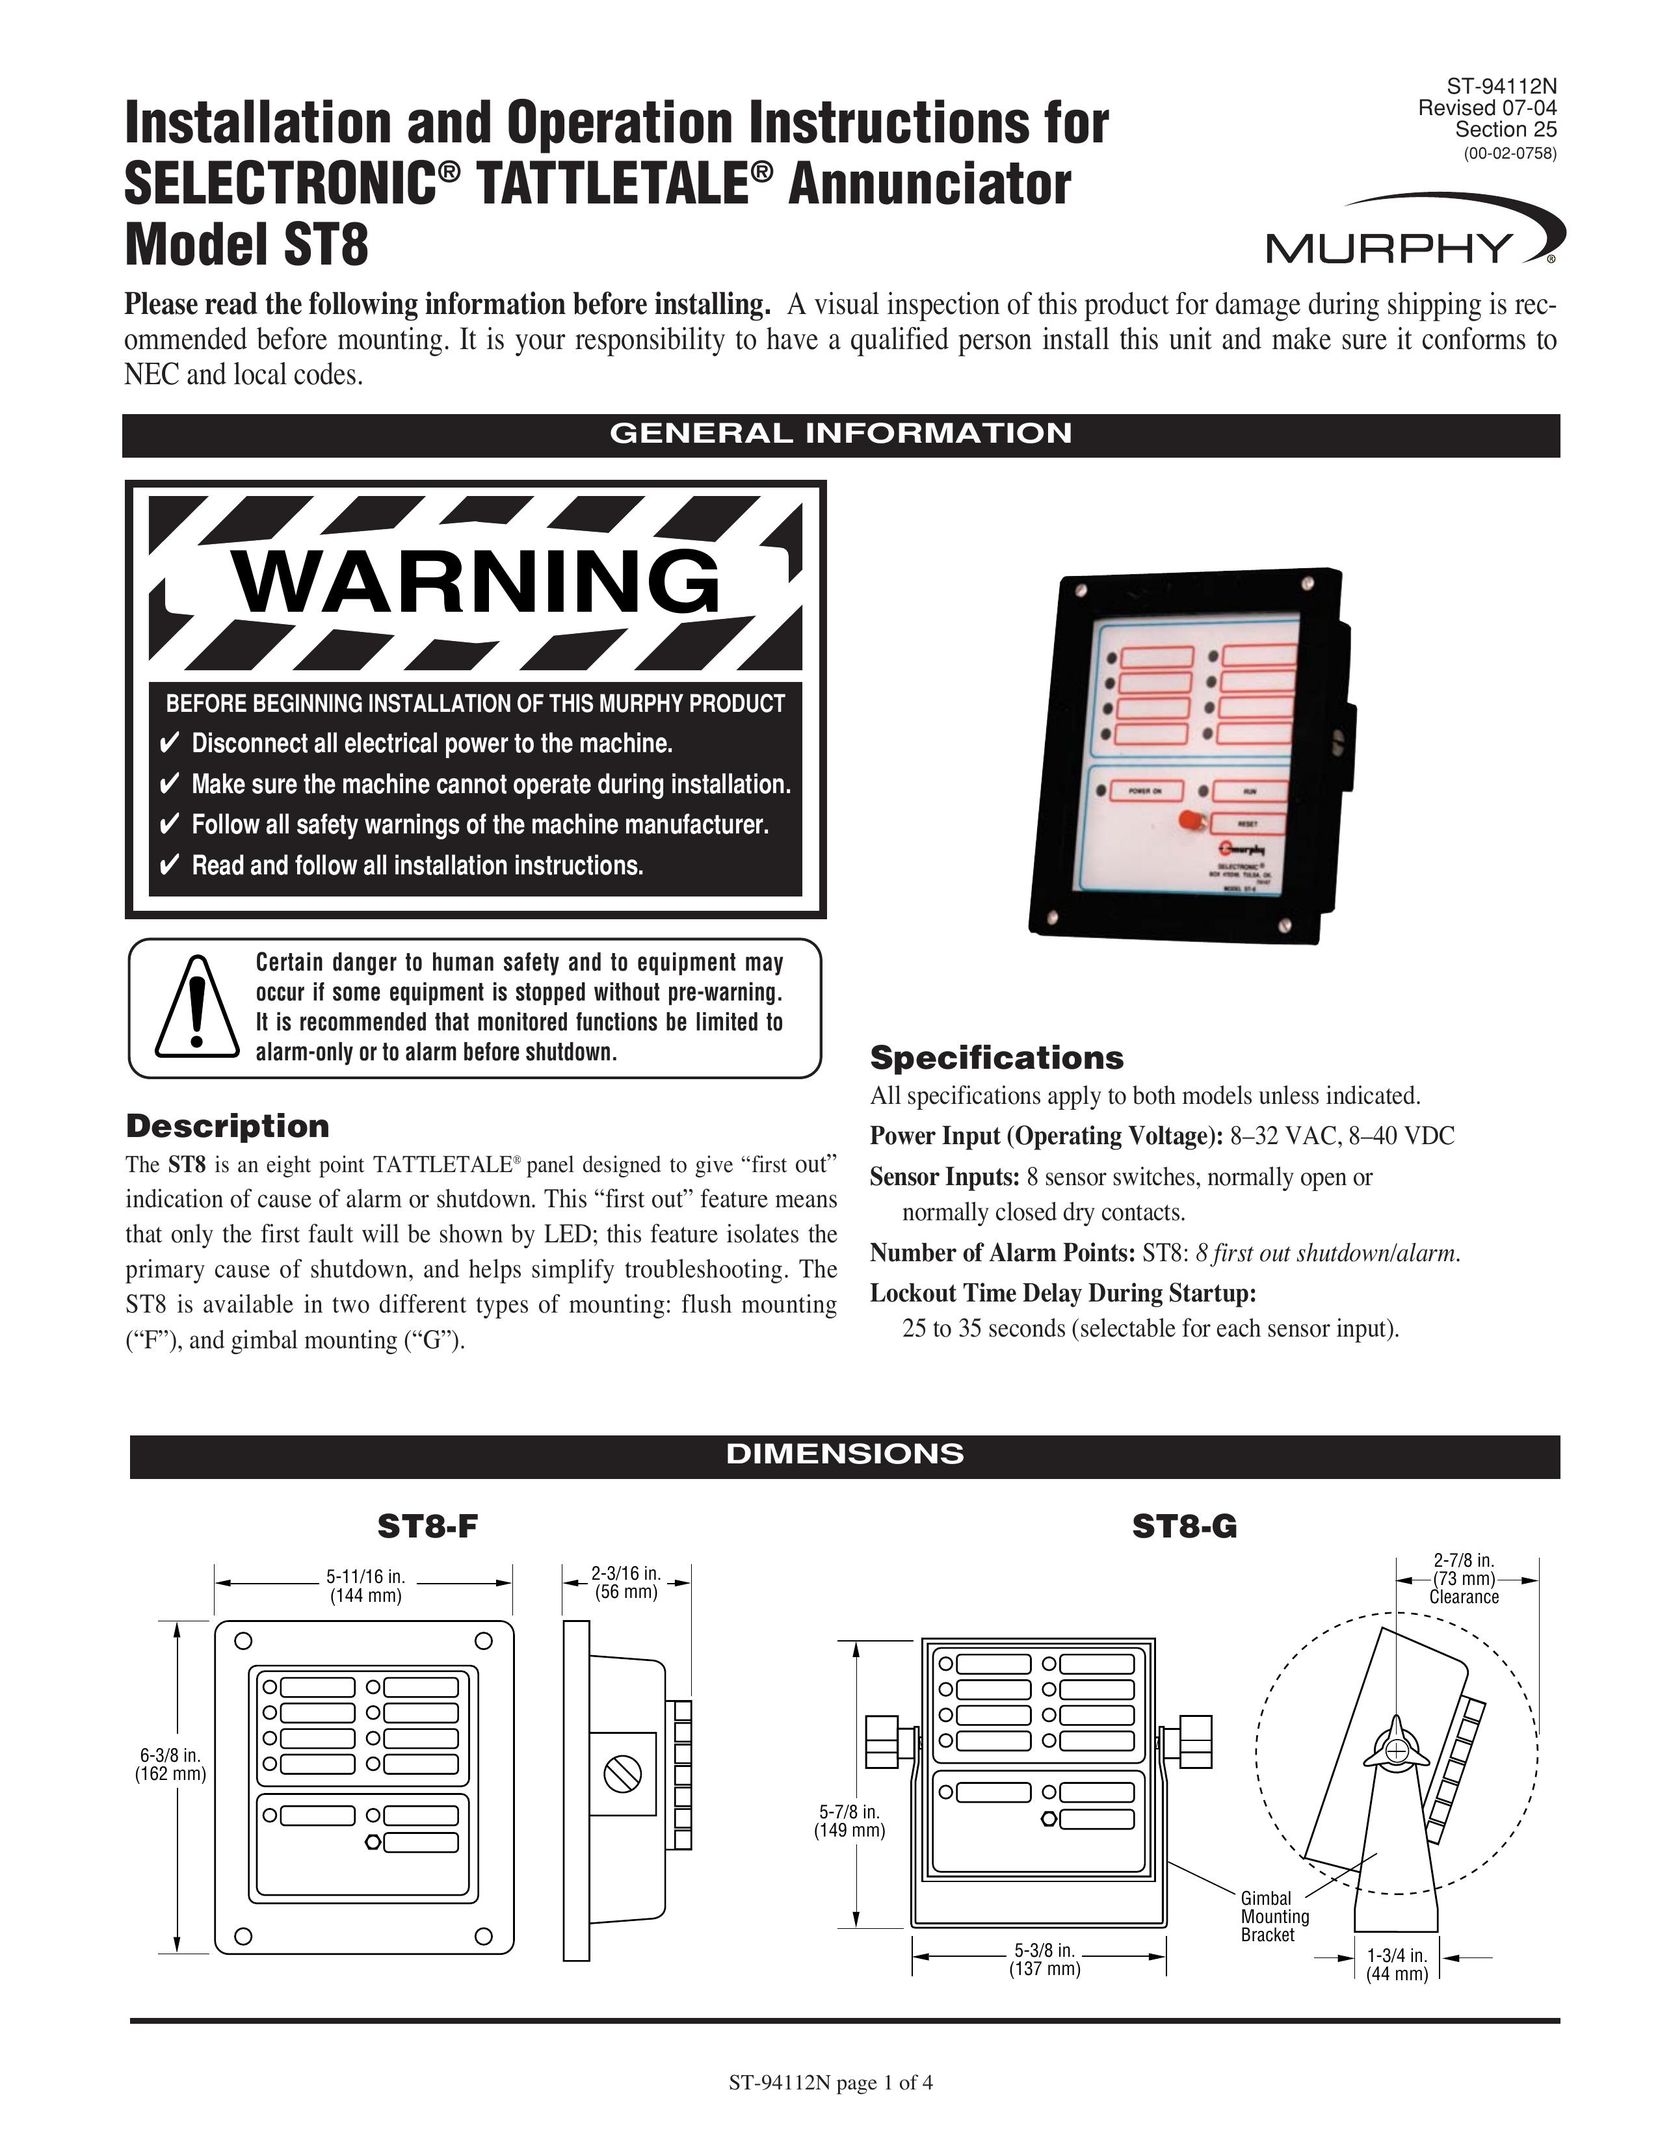 Murphy ST8 Network Card User Manual